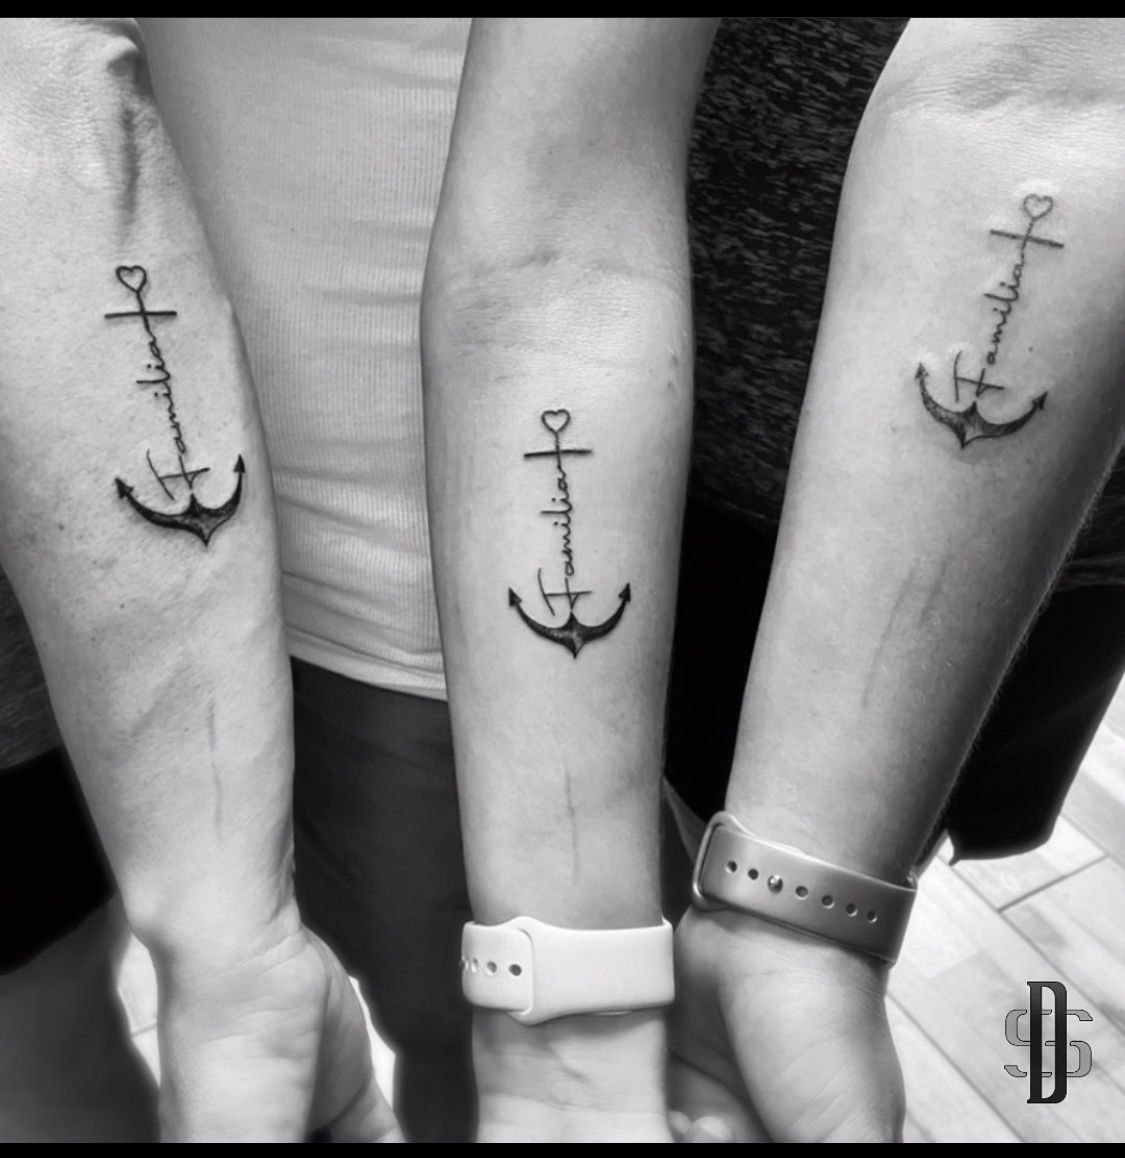 Matching family tattoo.